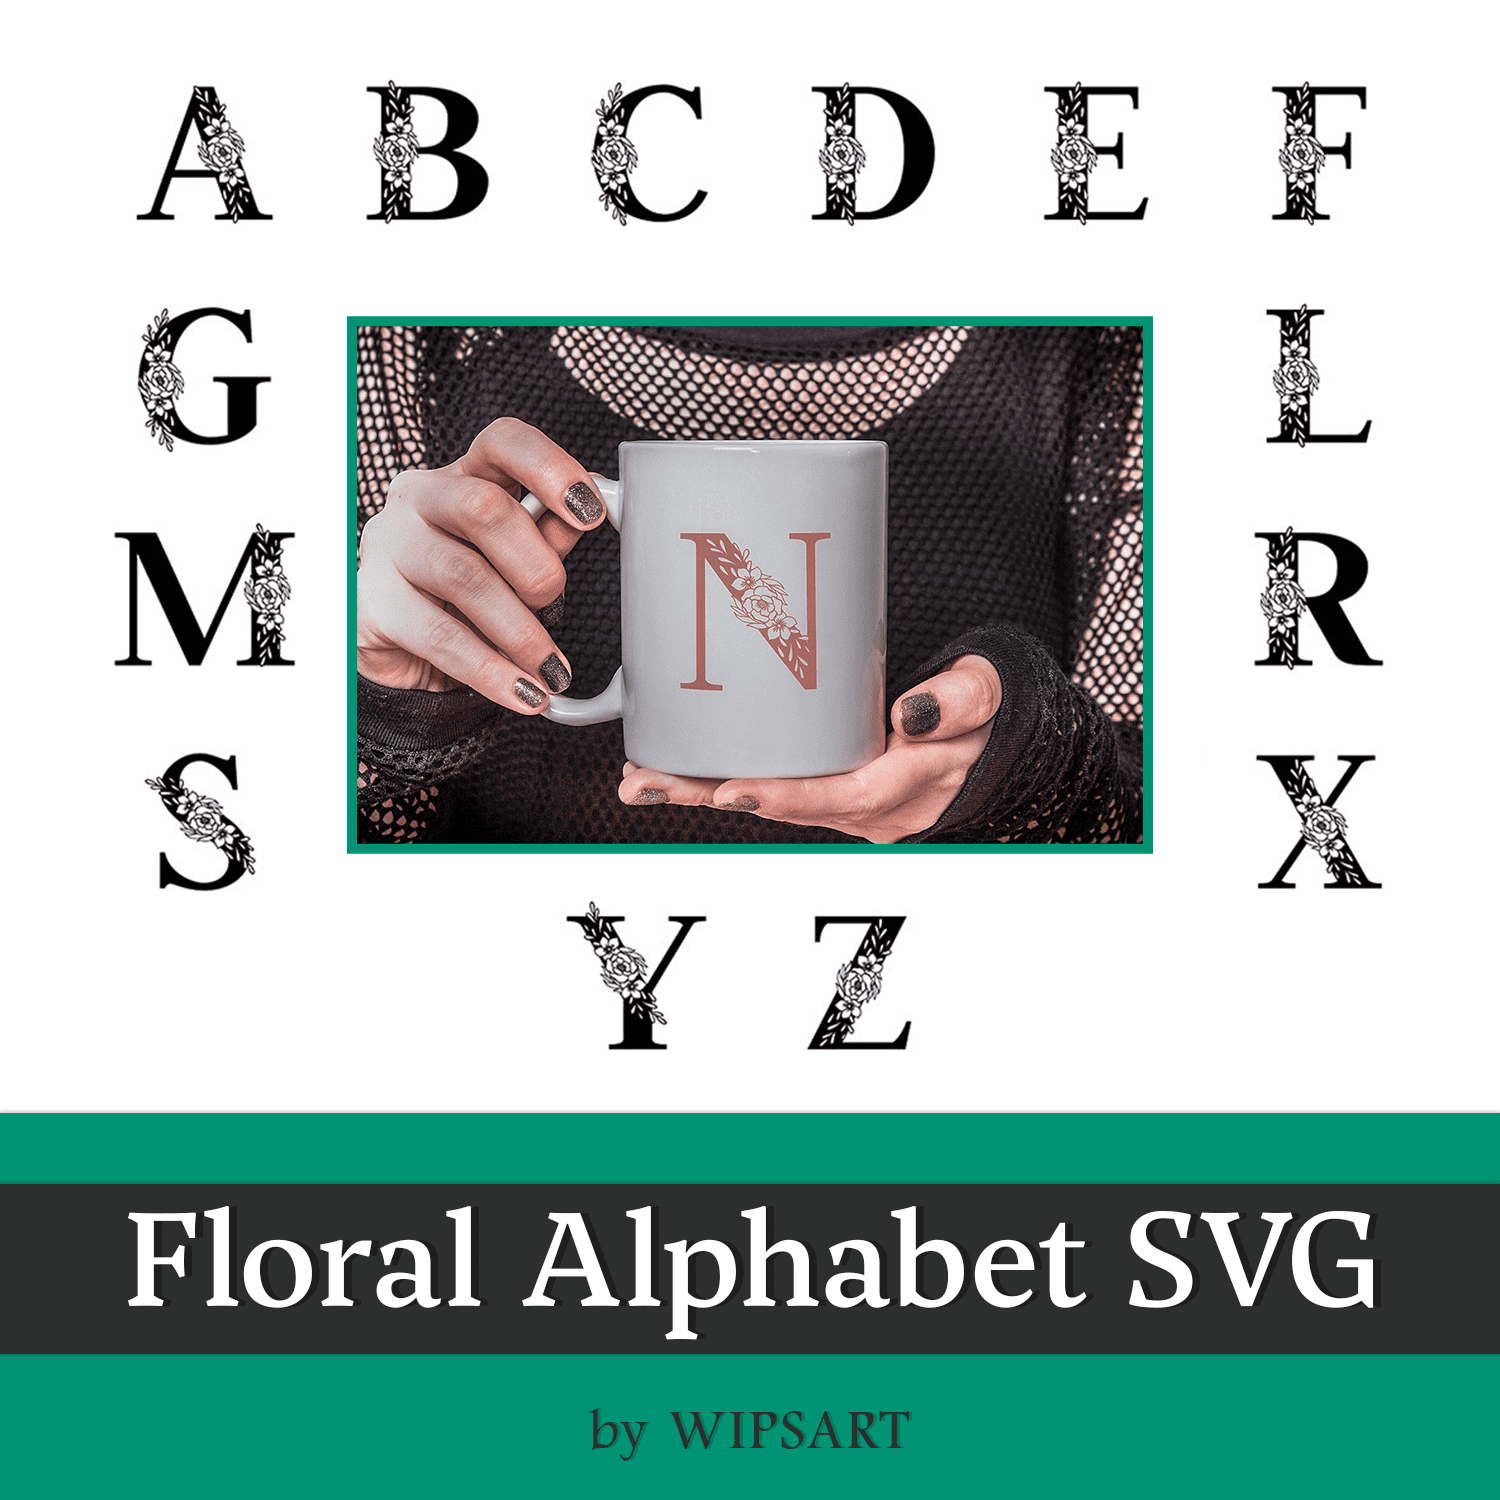 Floral Alphabet SVG, Flower Font Cut file.